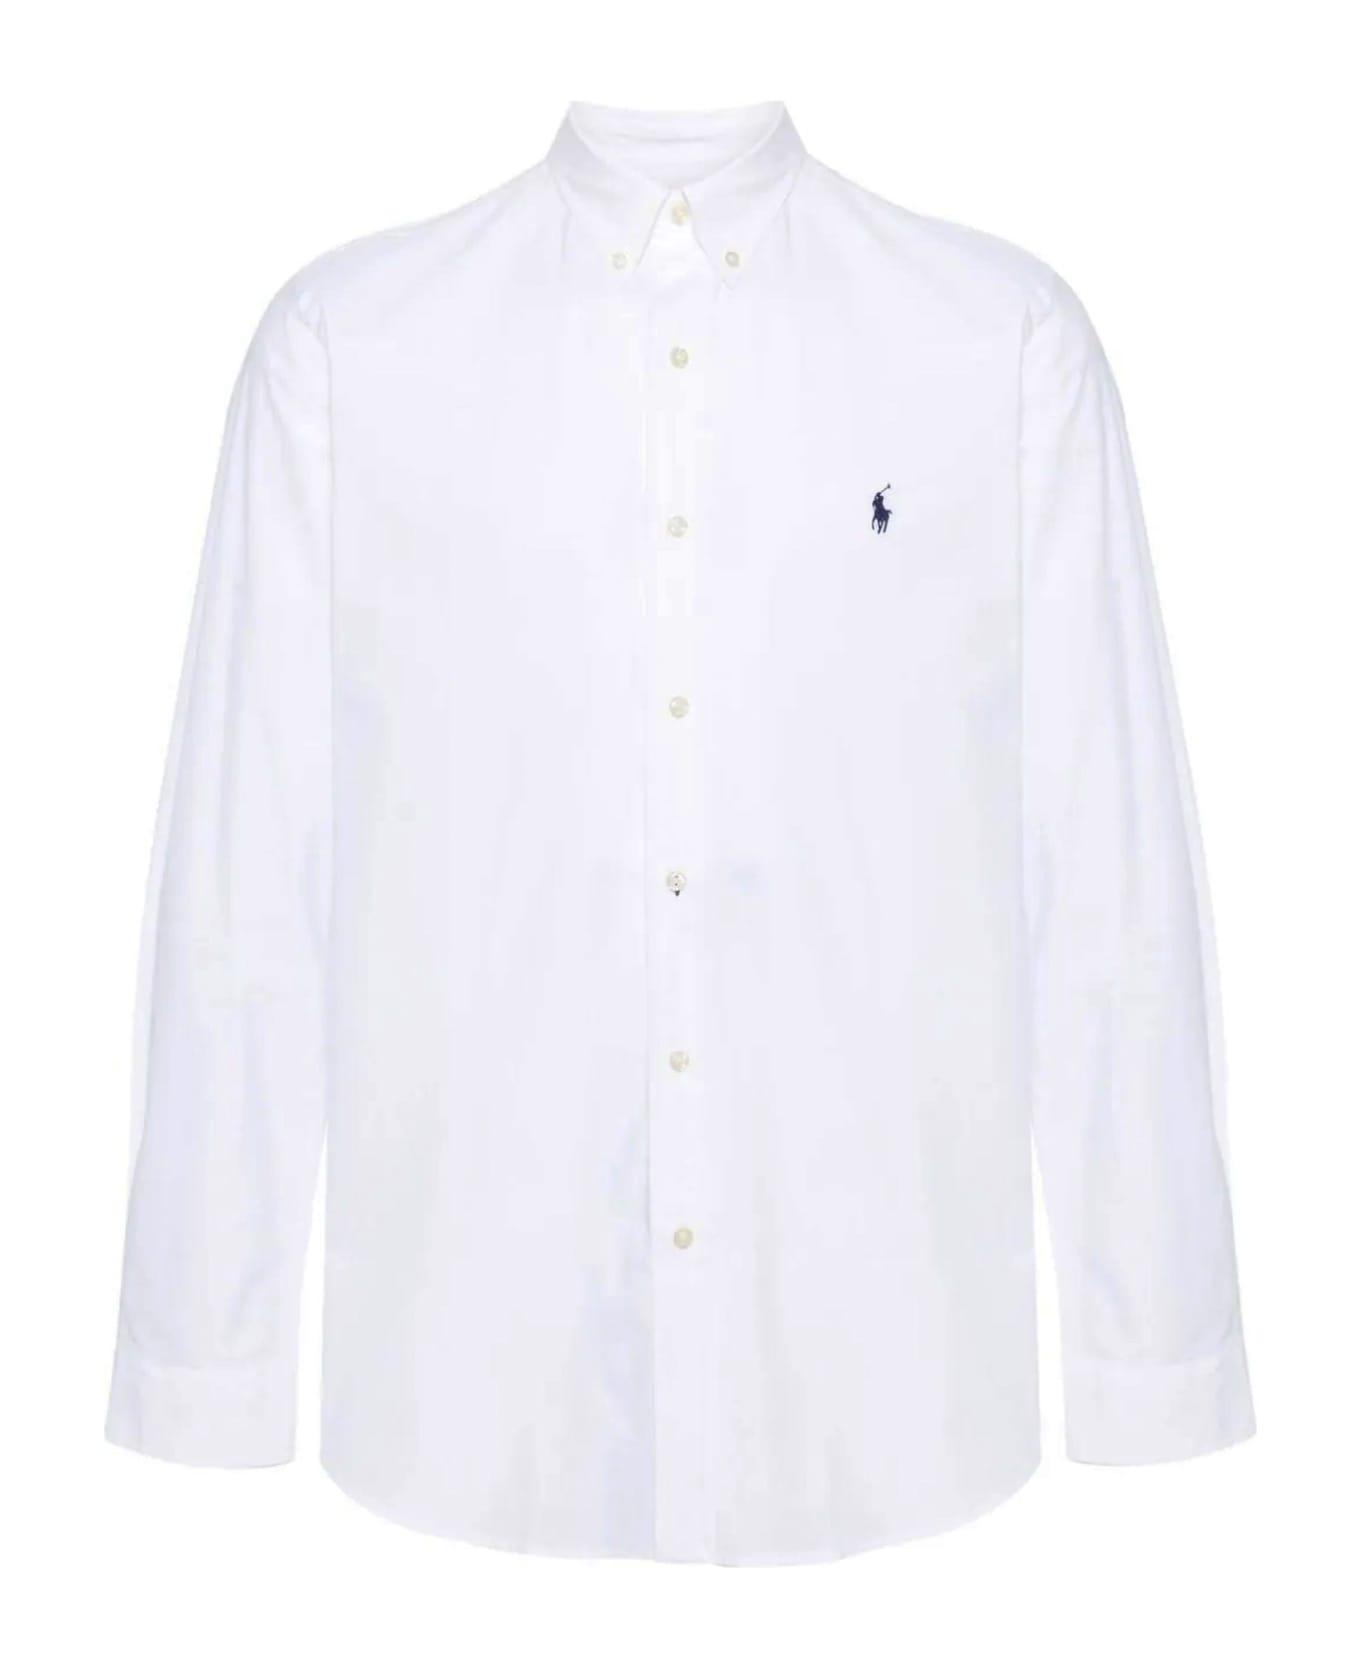 Polo Ralph Lauren White Stretch-cotton Shirt - White